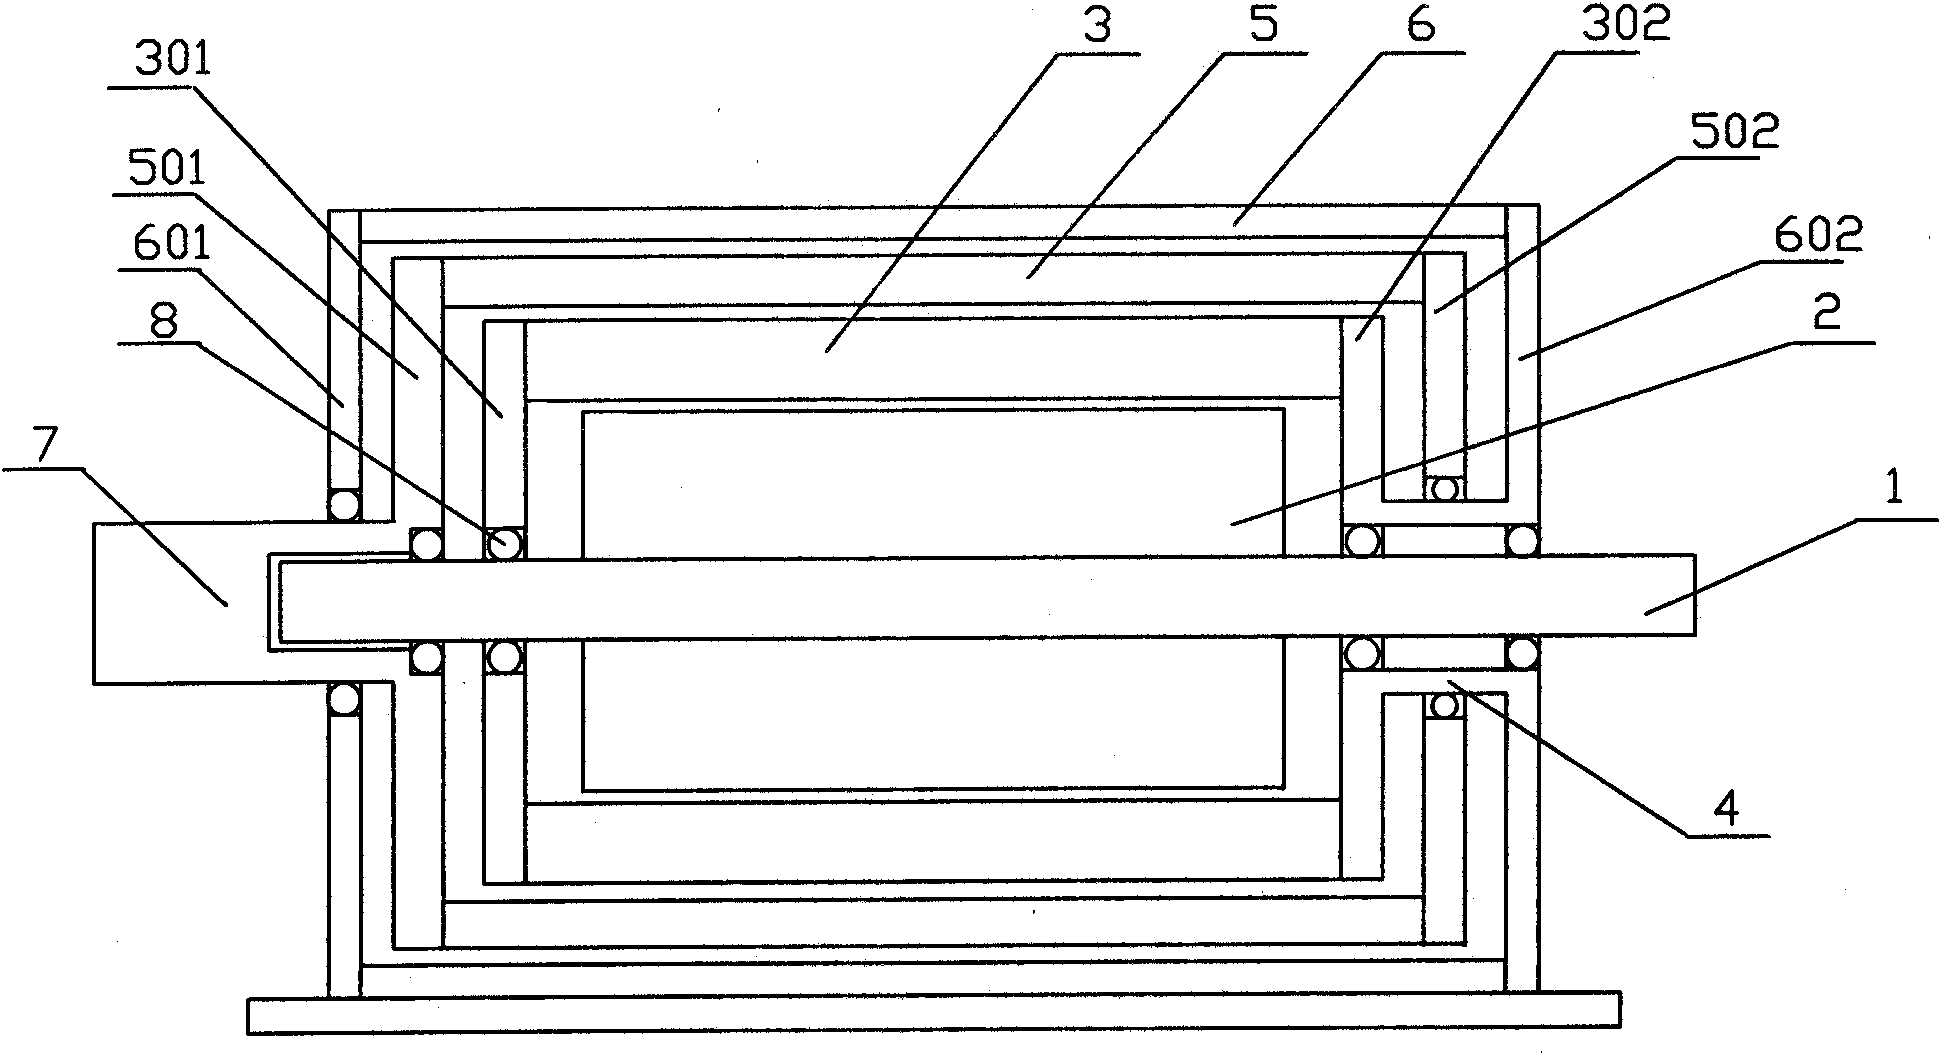 Multi-functional motor